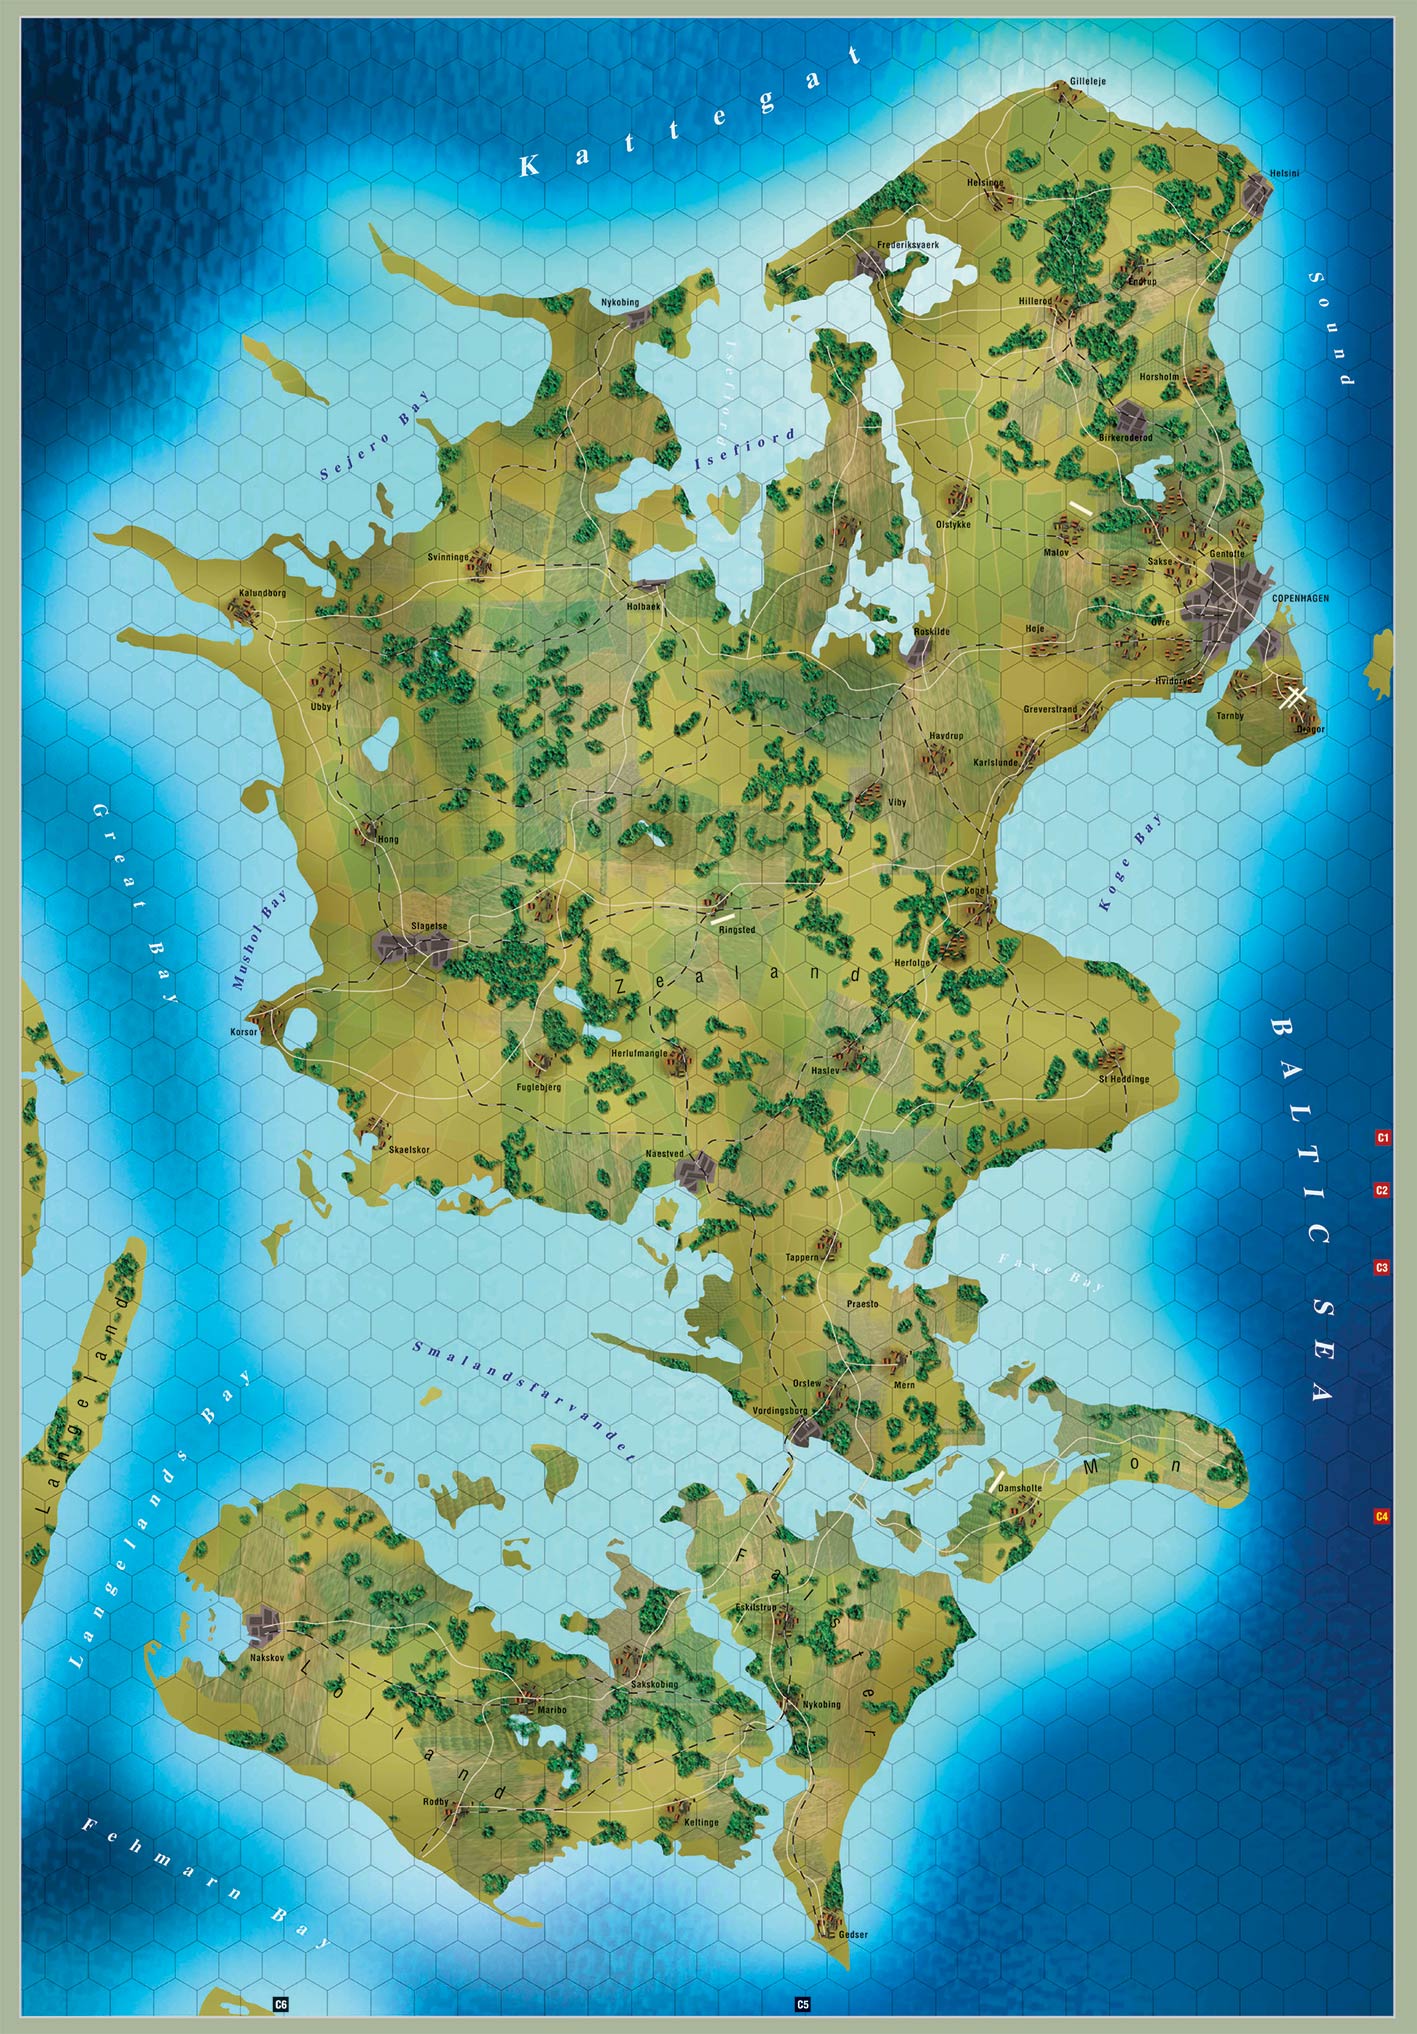 Zealand 1985 operation map